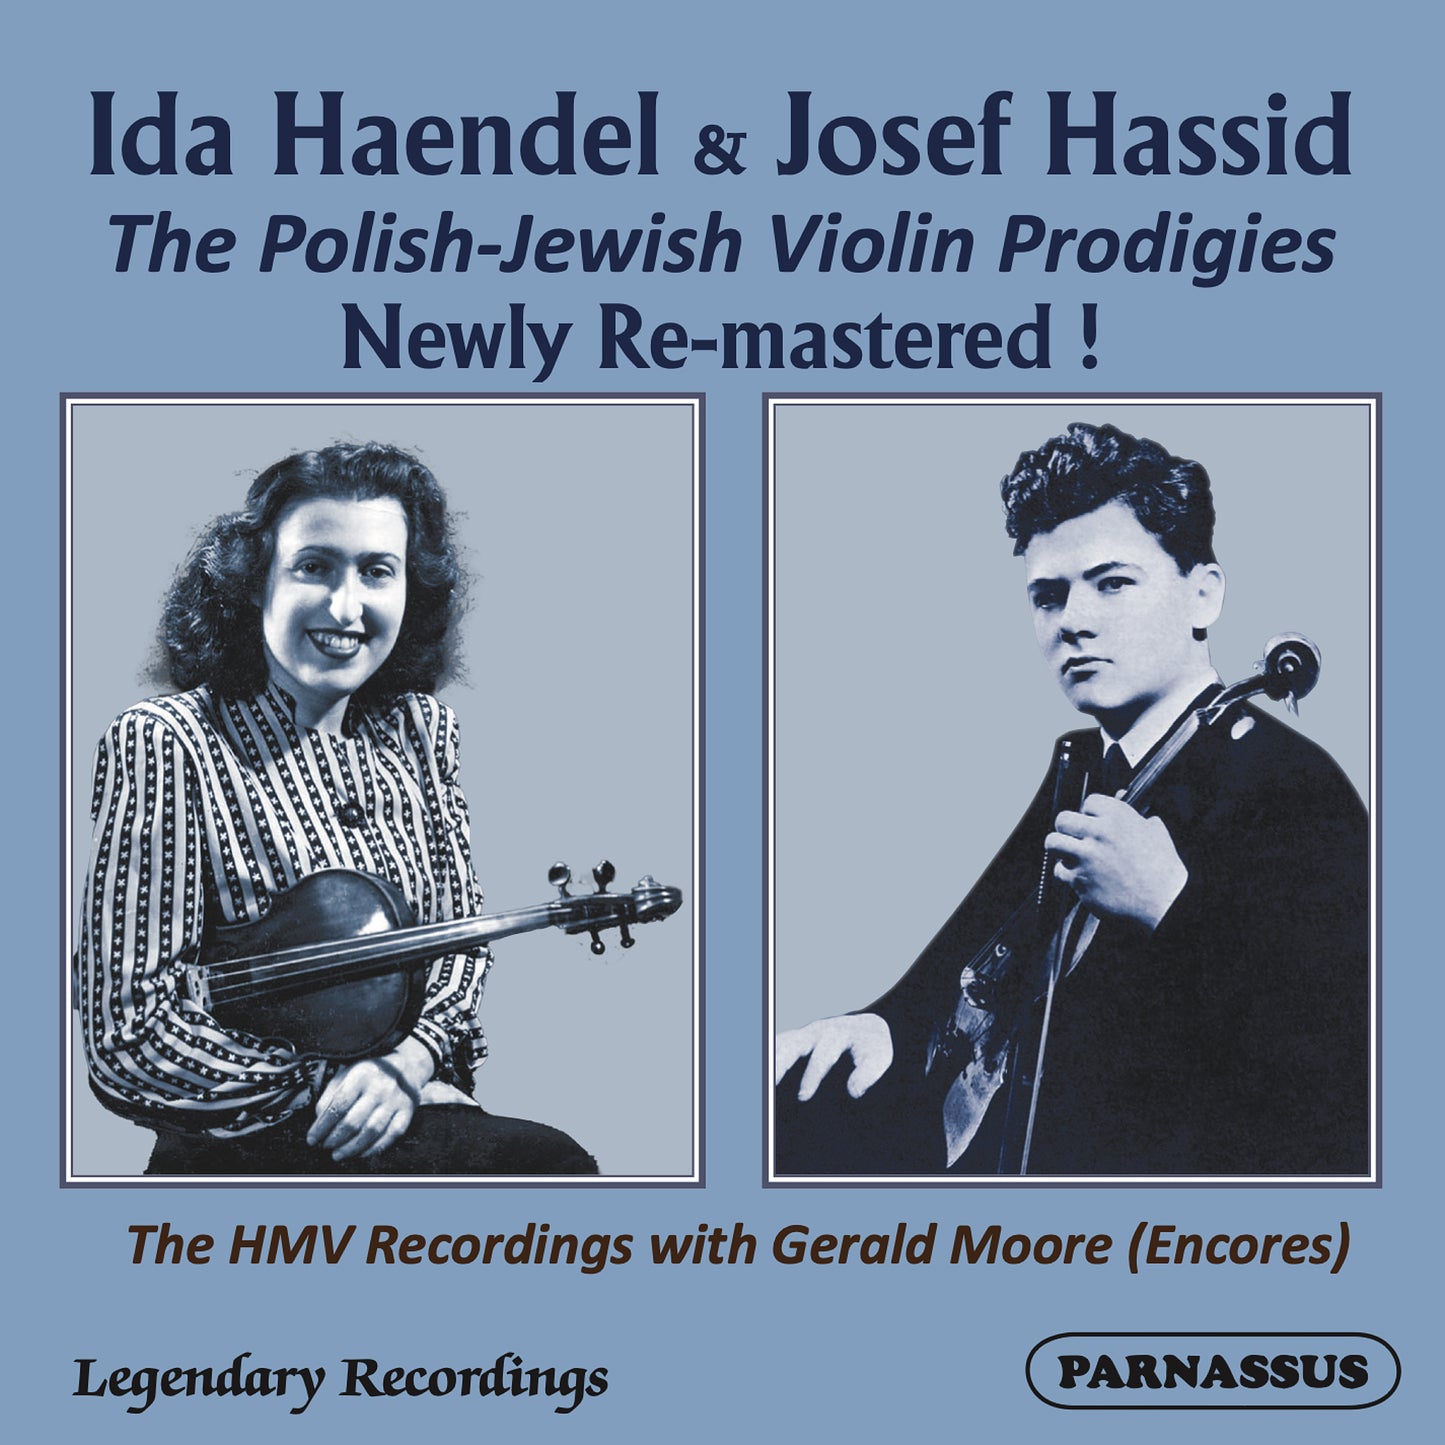 IDA HAENDEL & JOSEF HASSID: THE POLISH-JEWISH VIOLIN PRODIGIES (DIGITAL DOWNLOAD)